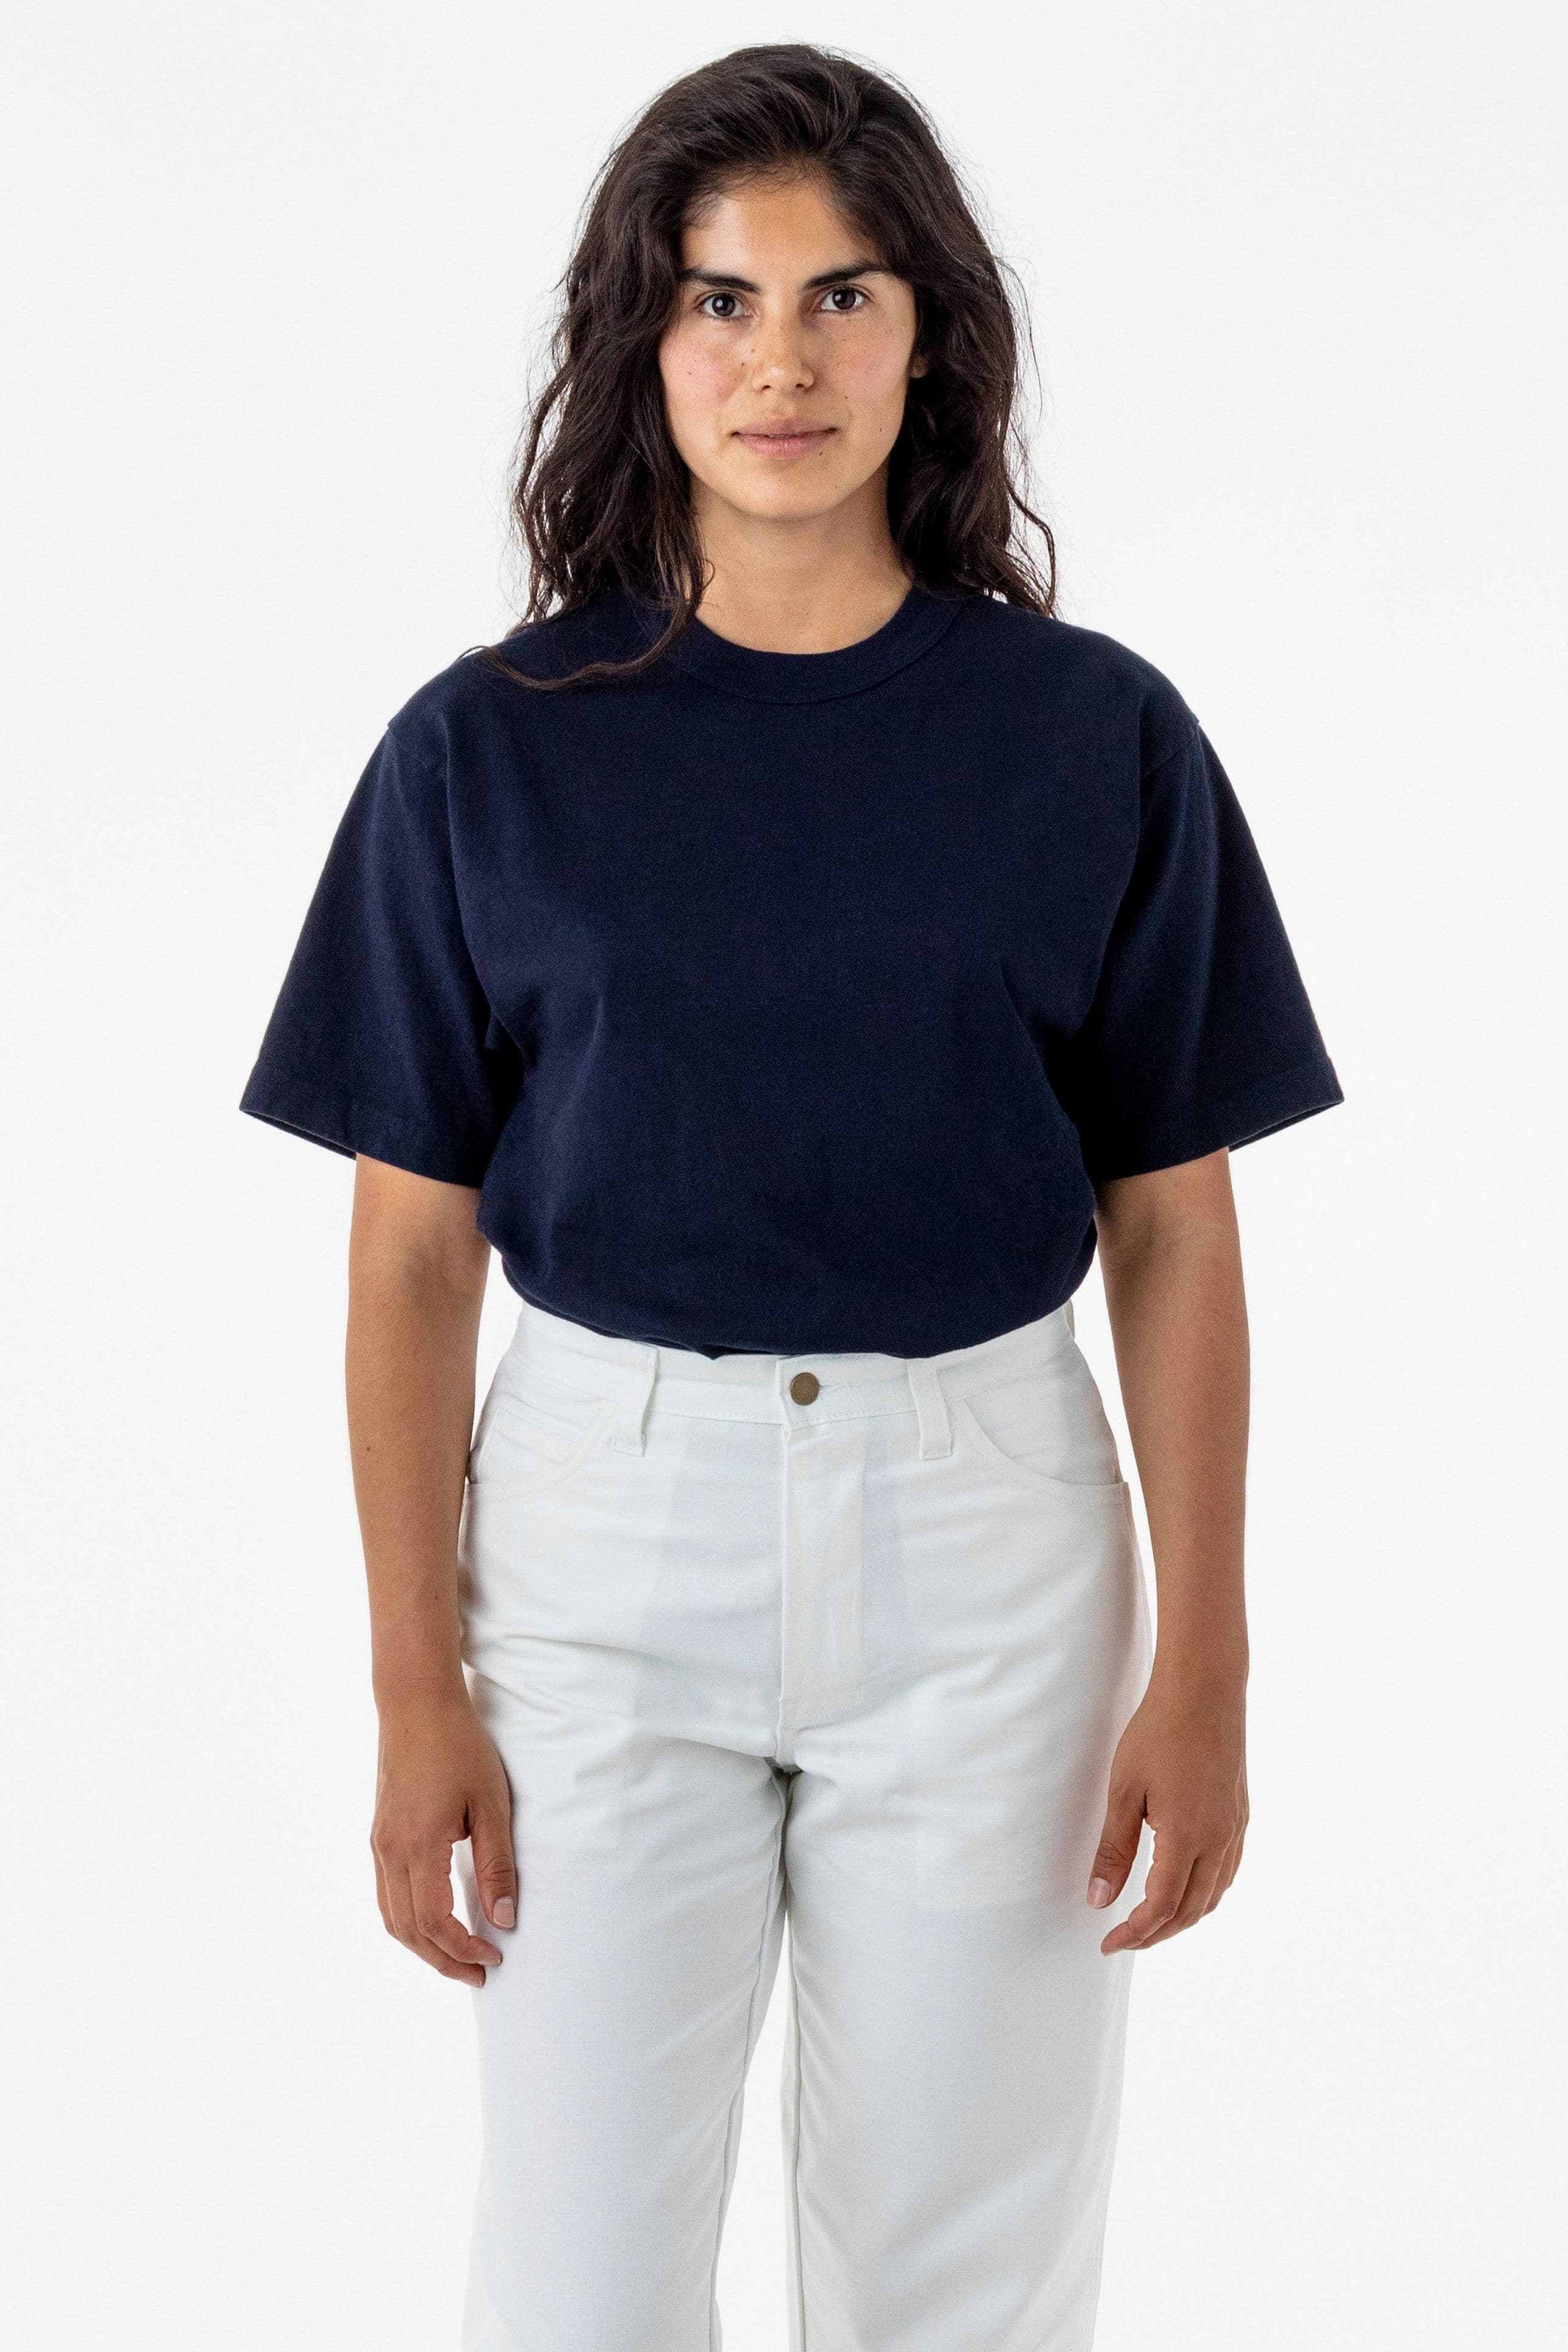 Lacyland - Short-Sleeve Built-In Bra T-Shirt